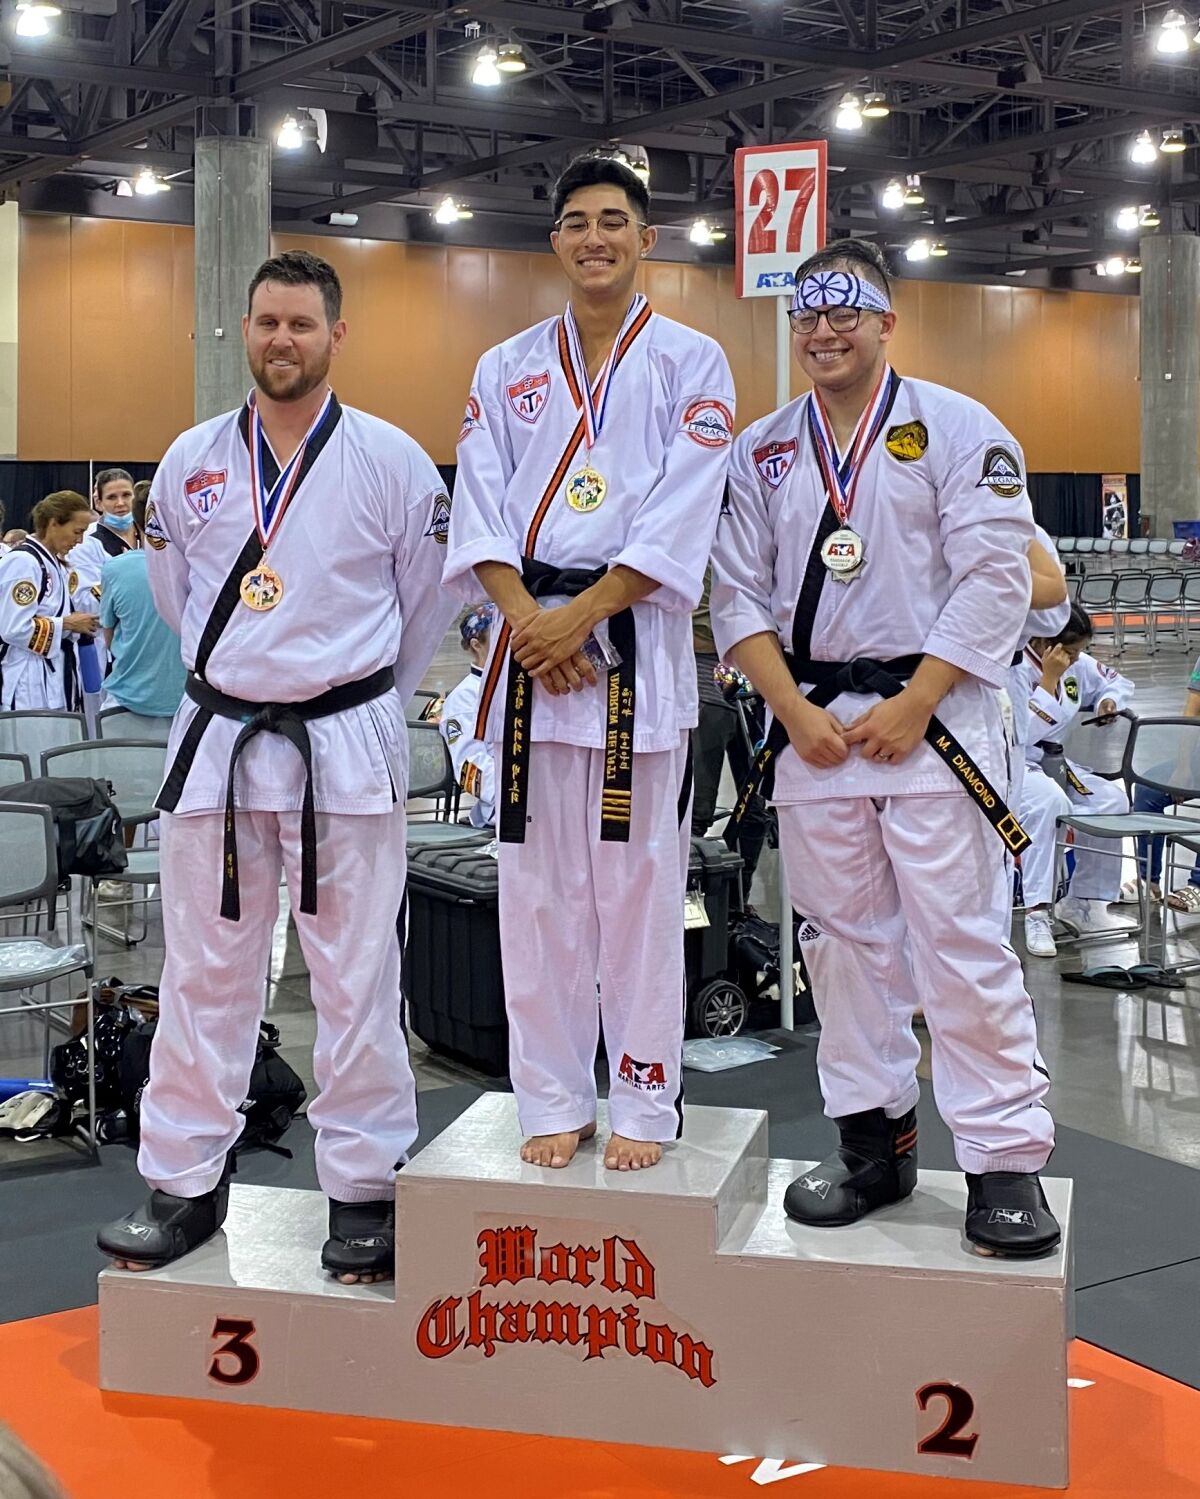 Andrew Heiati won his third straight championship at the ATA World Taekwondo Championships in Phoenix.